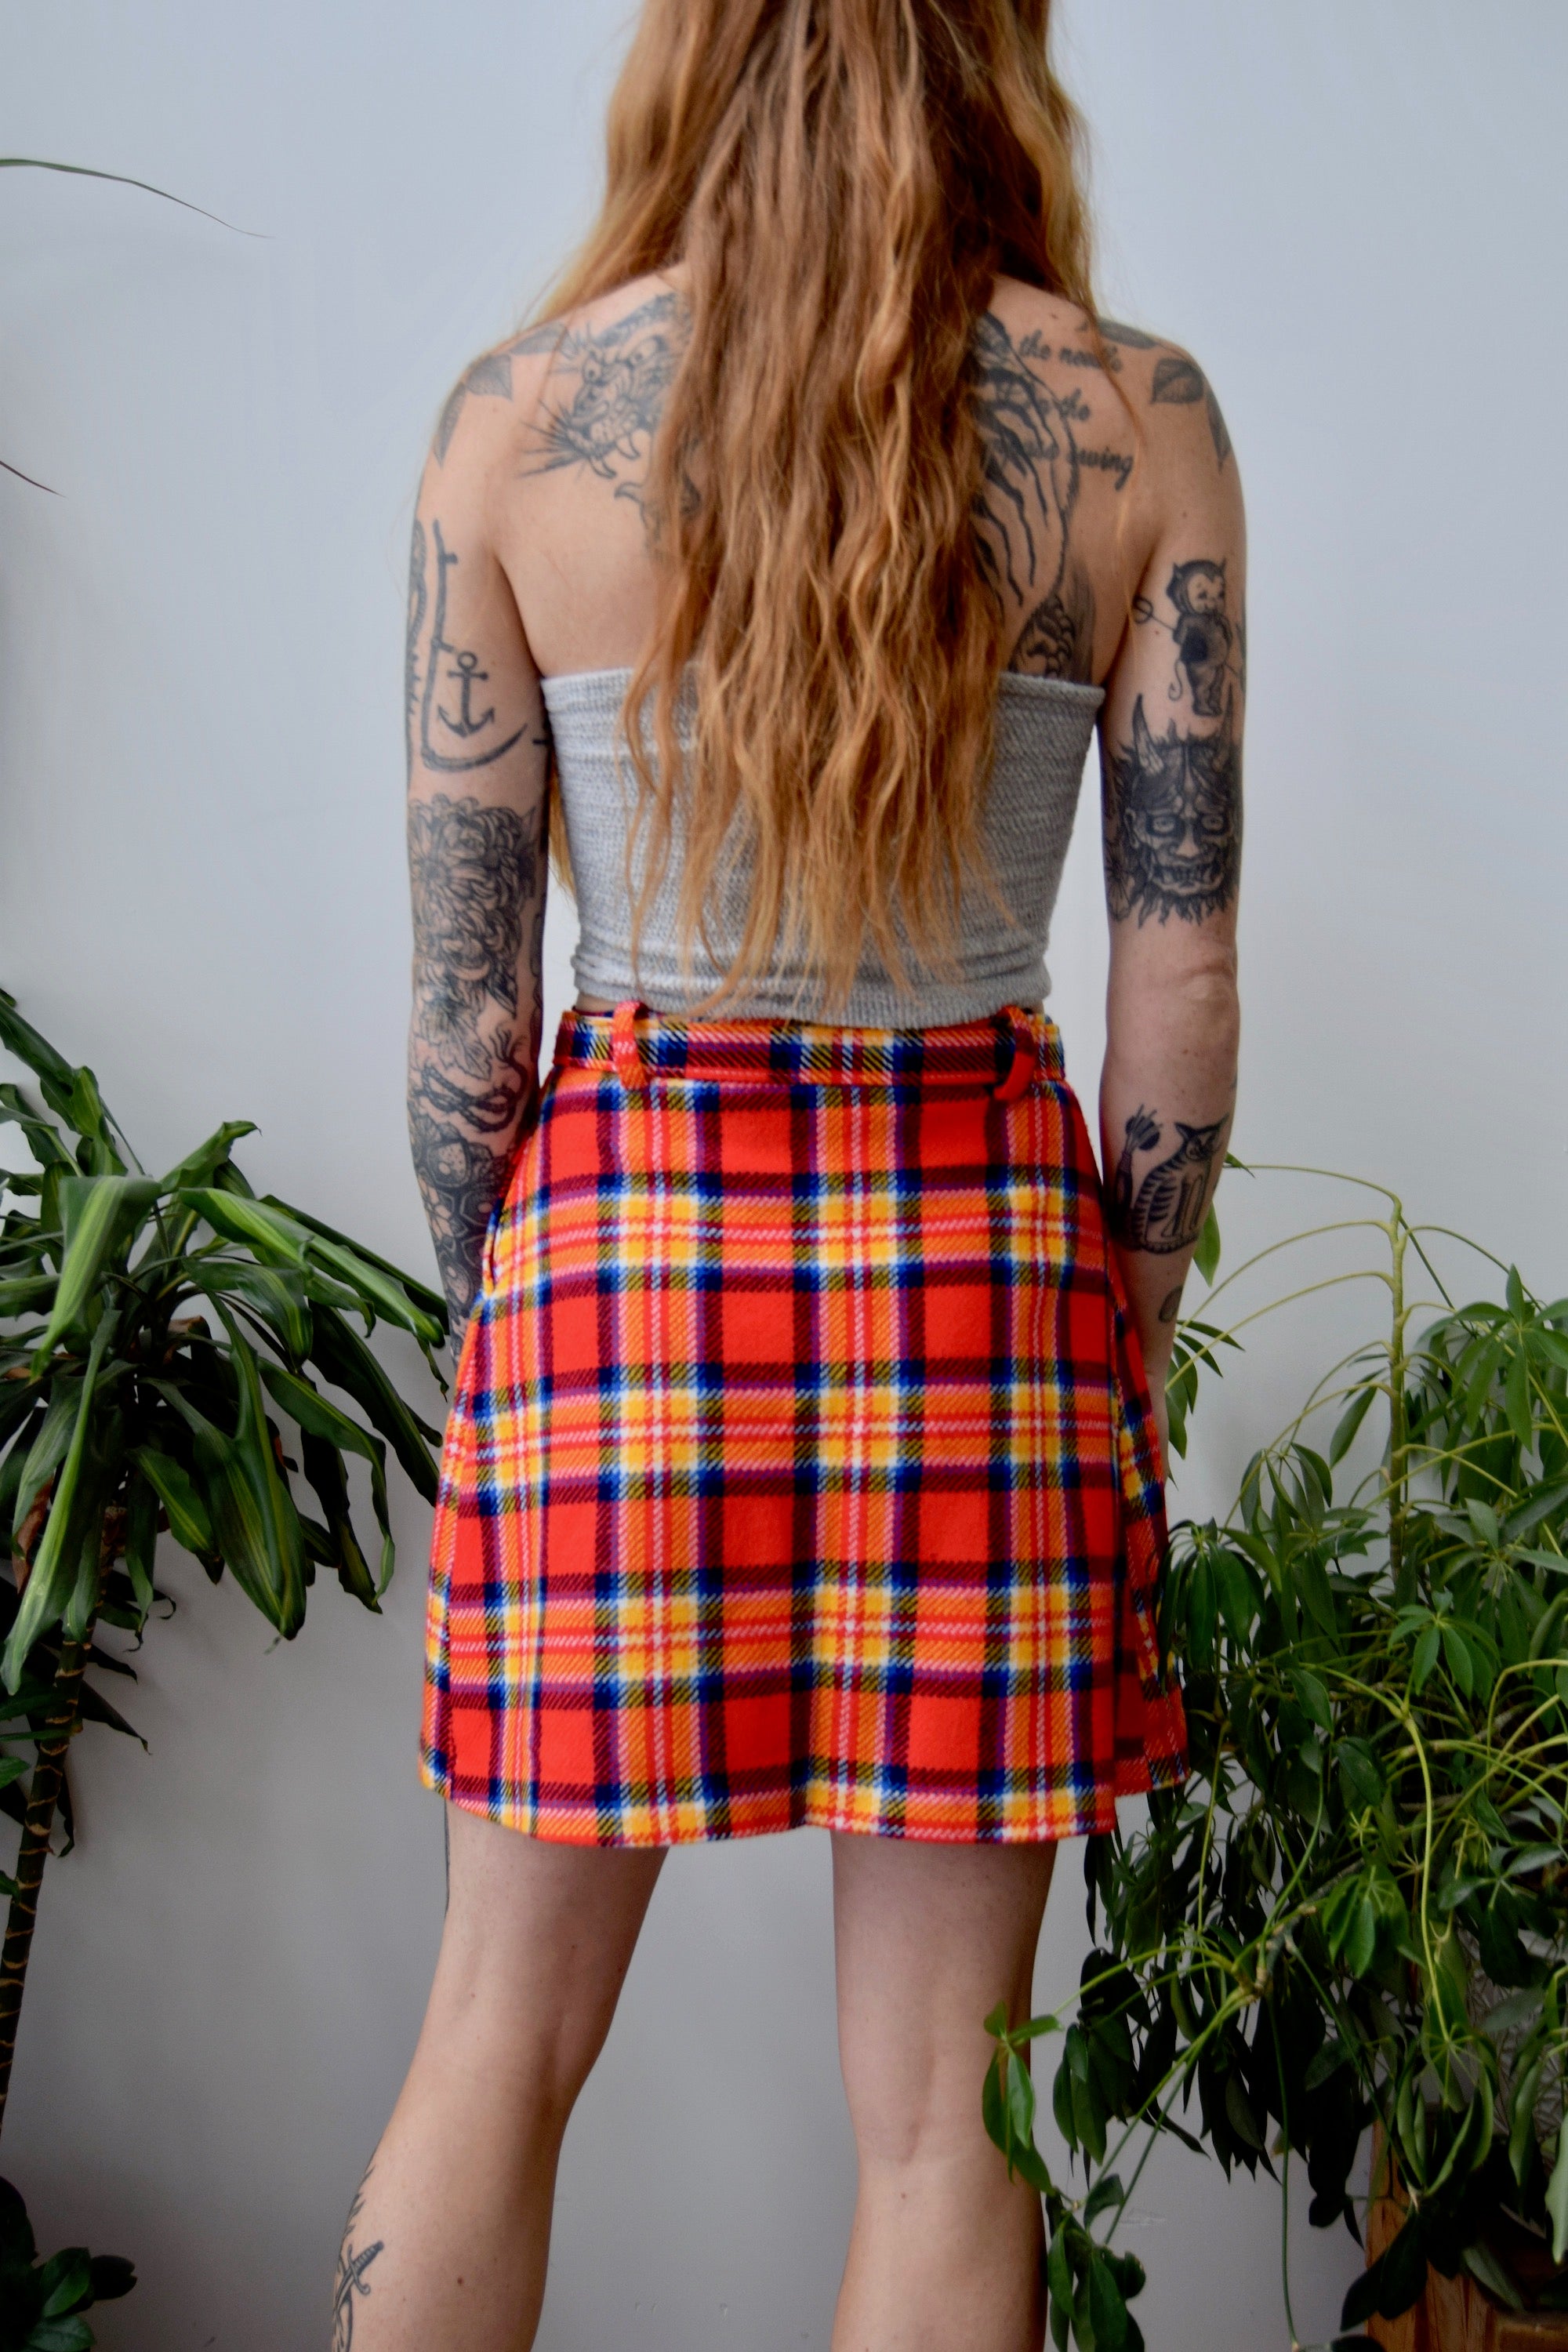 Neon Plaid Mini Skirt